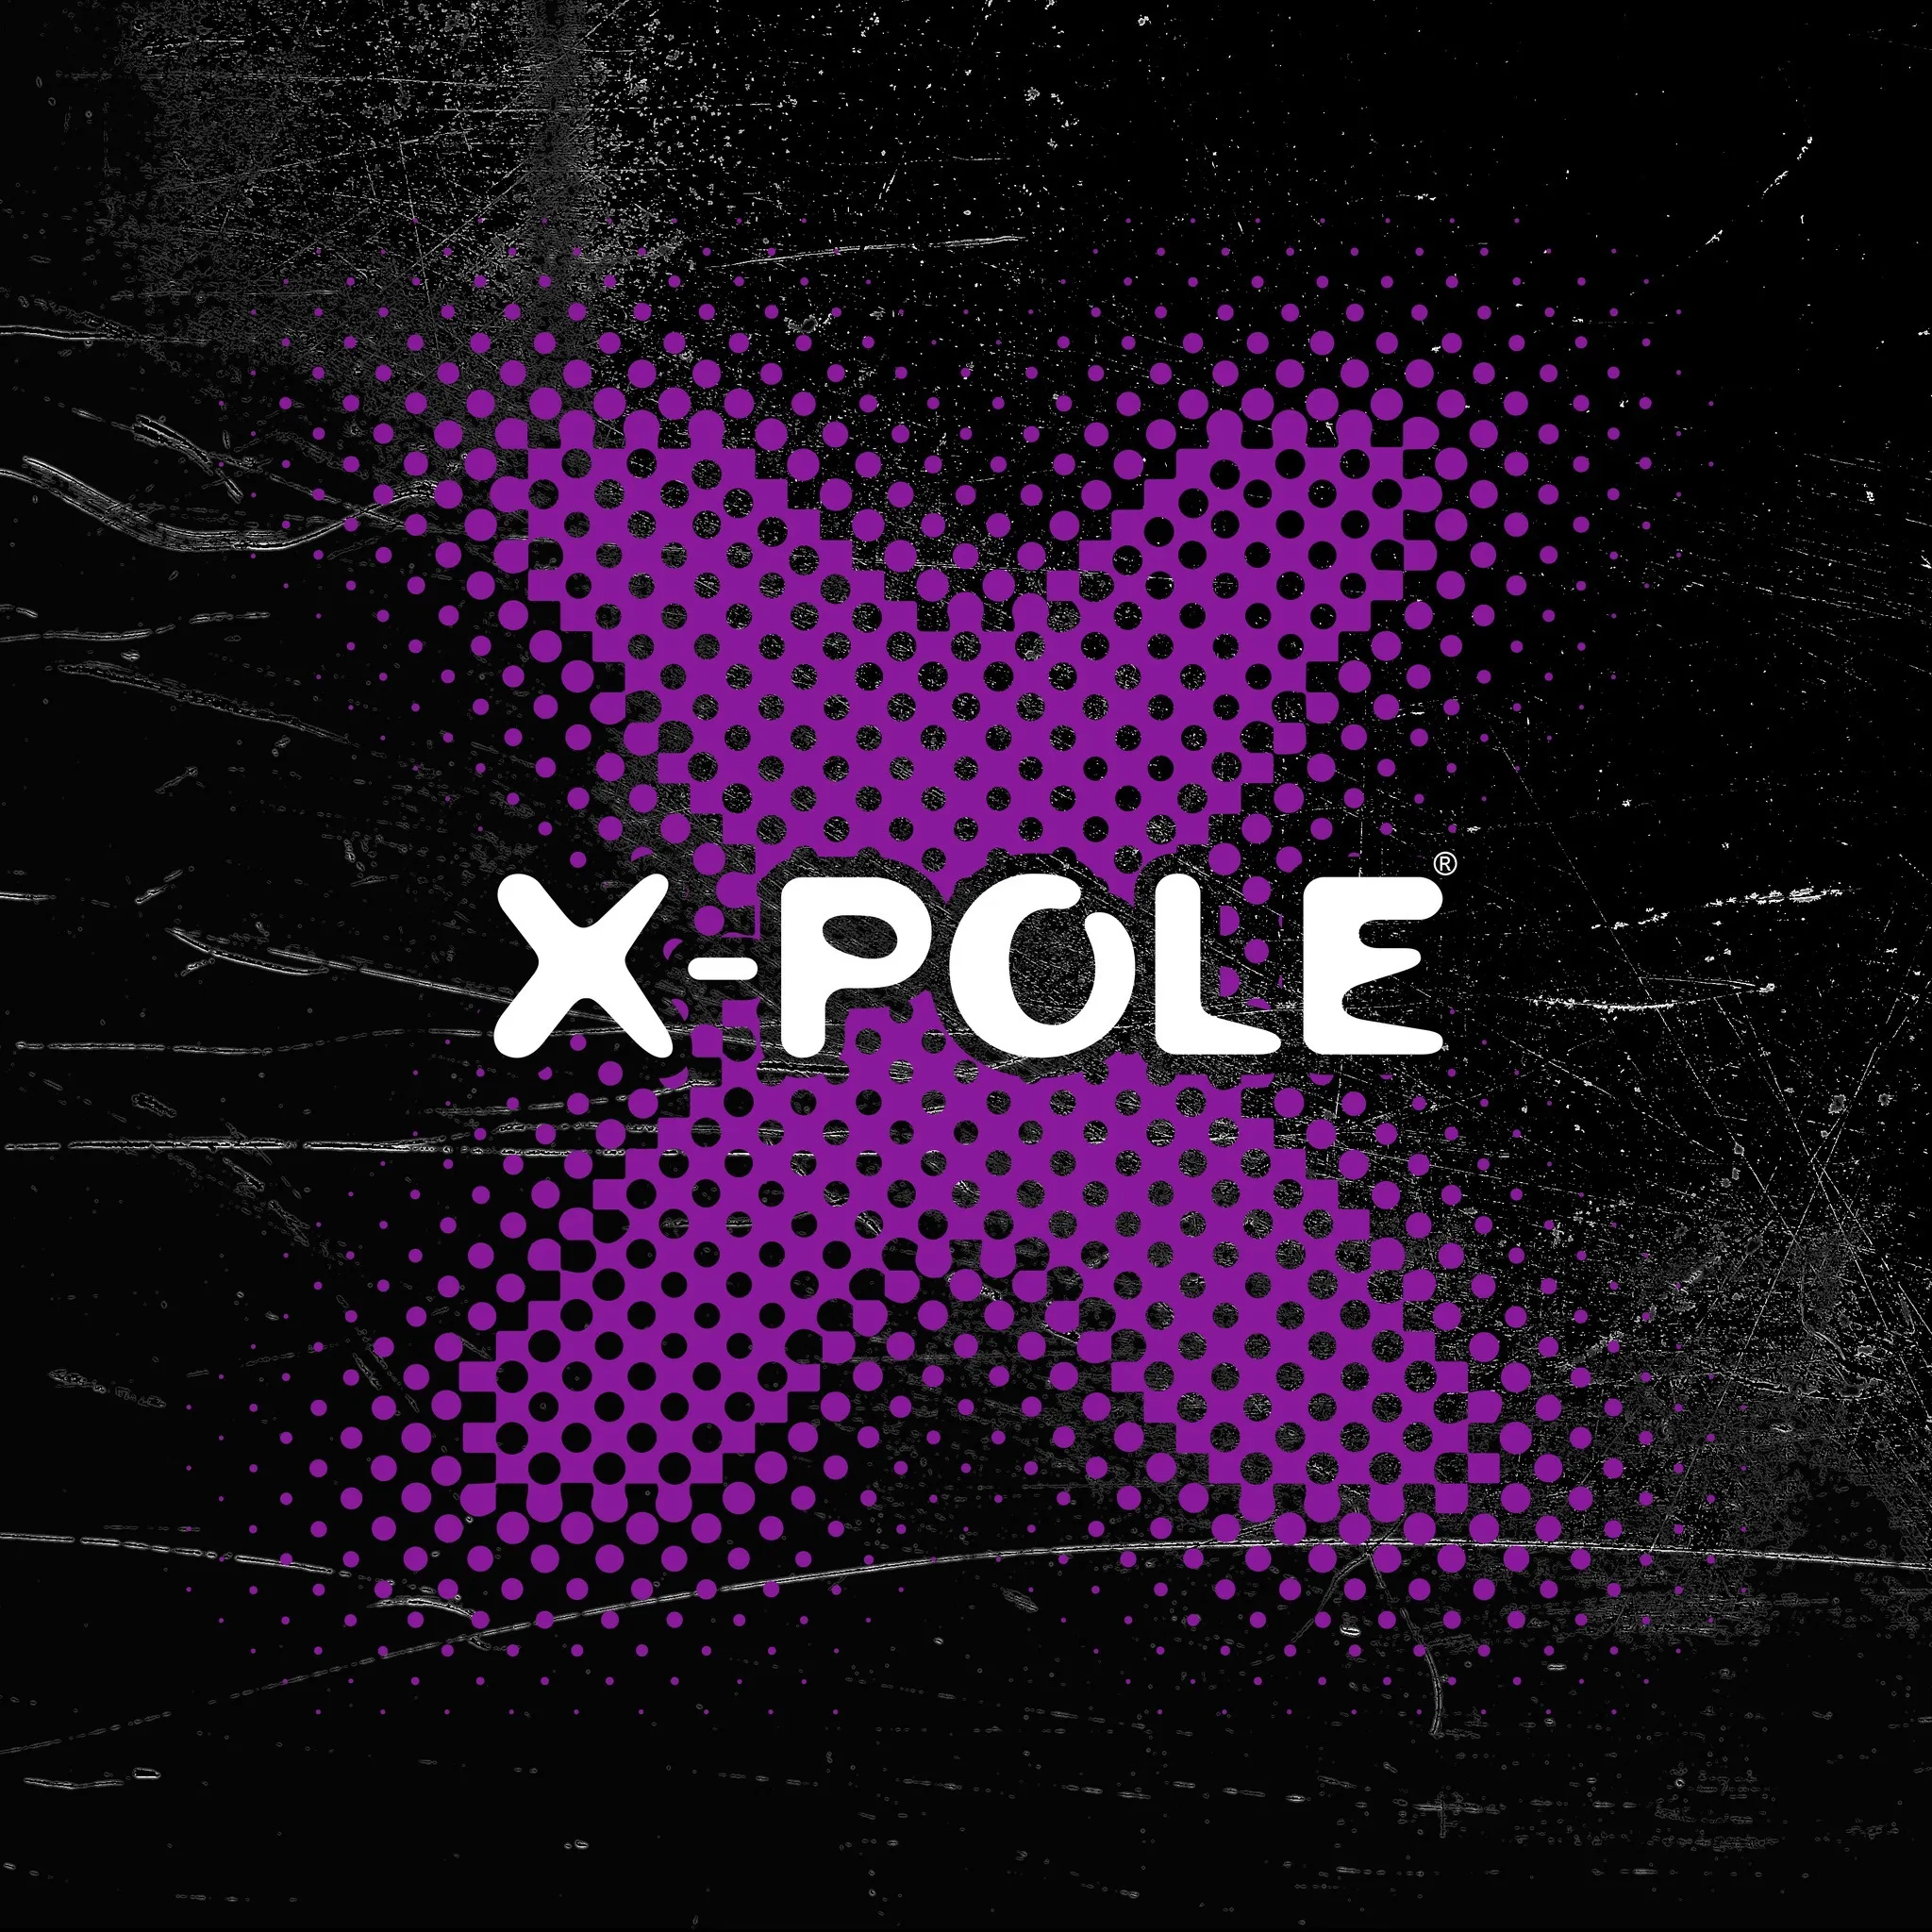 X-pole 쿠폰 코드 